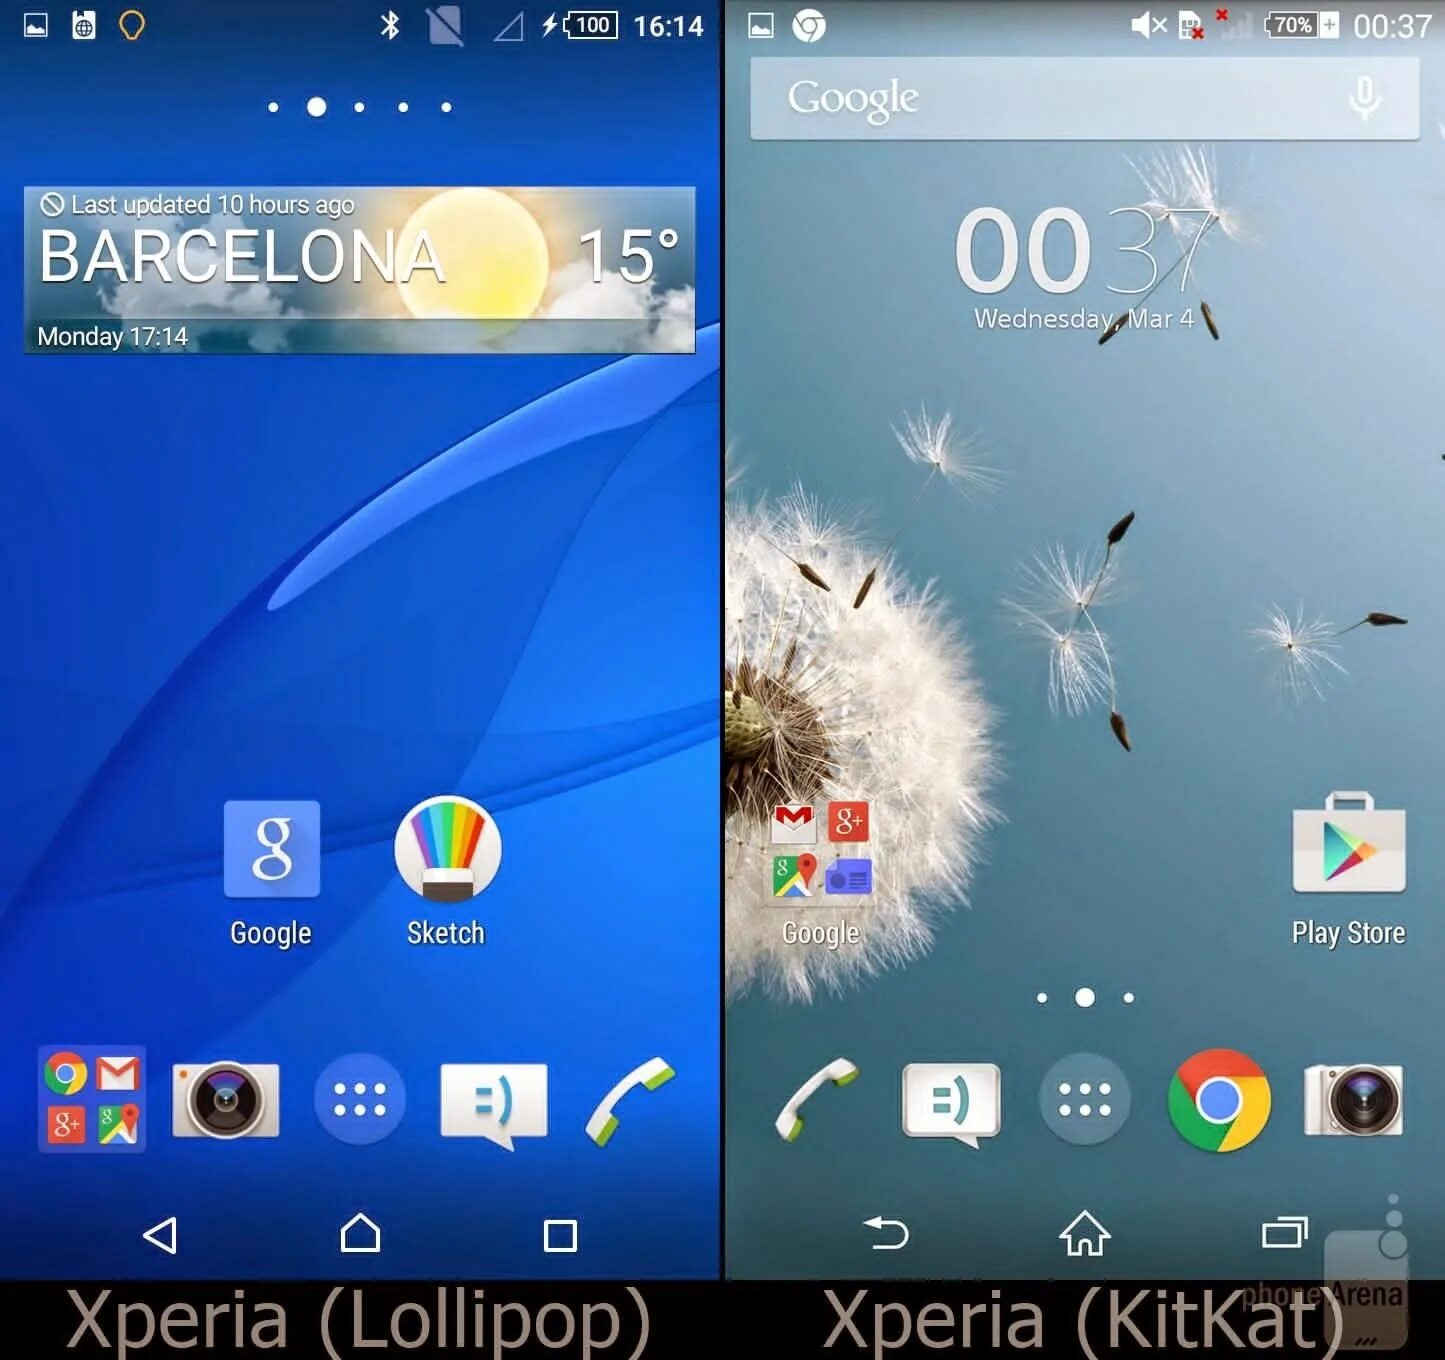 Сравнение xperia. Сони иксперия андроид. Оболочка Sony Xperia. Андроид 5.0.2. Sony 4.4 Xperia Android телефон.